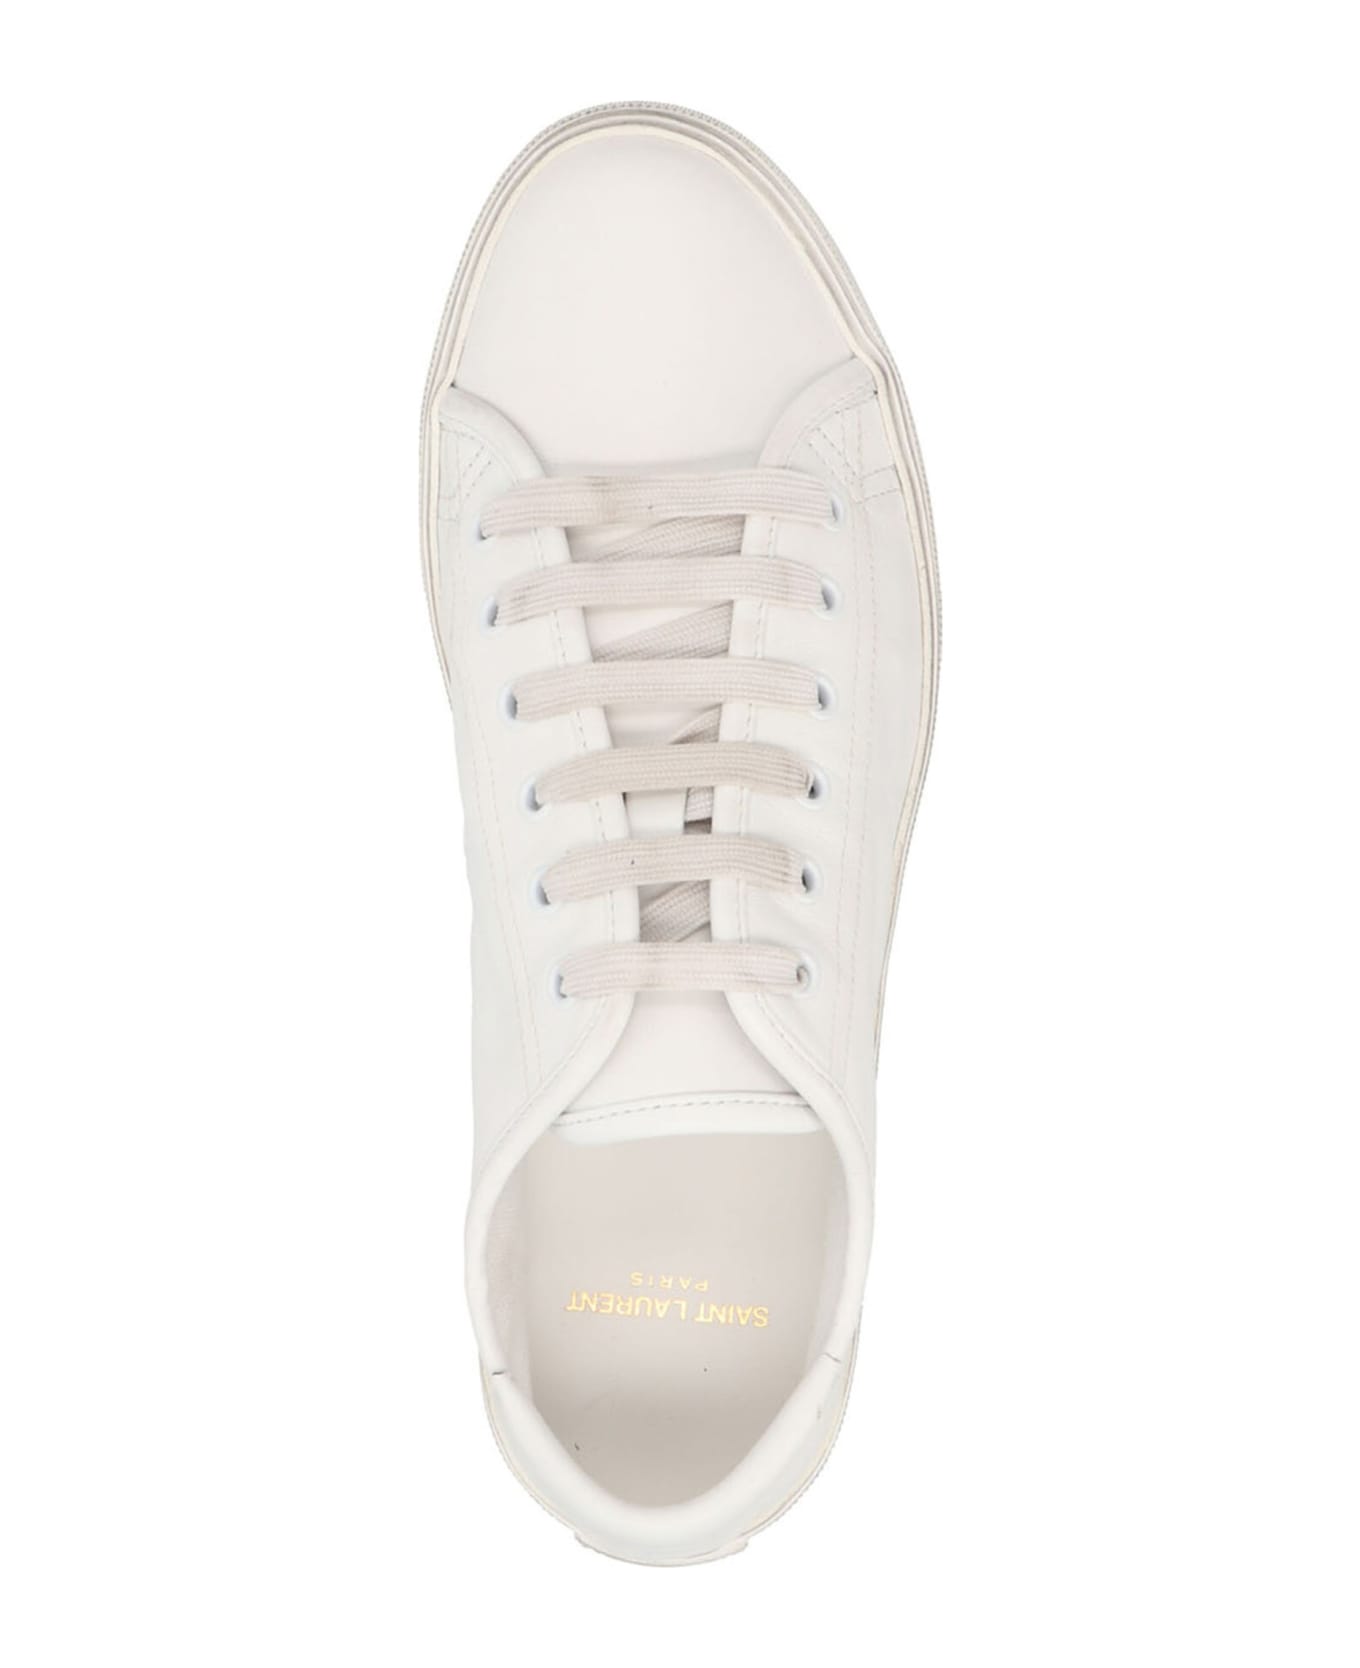 Saint Laurent Malibu Sneakers - White